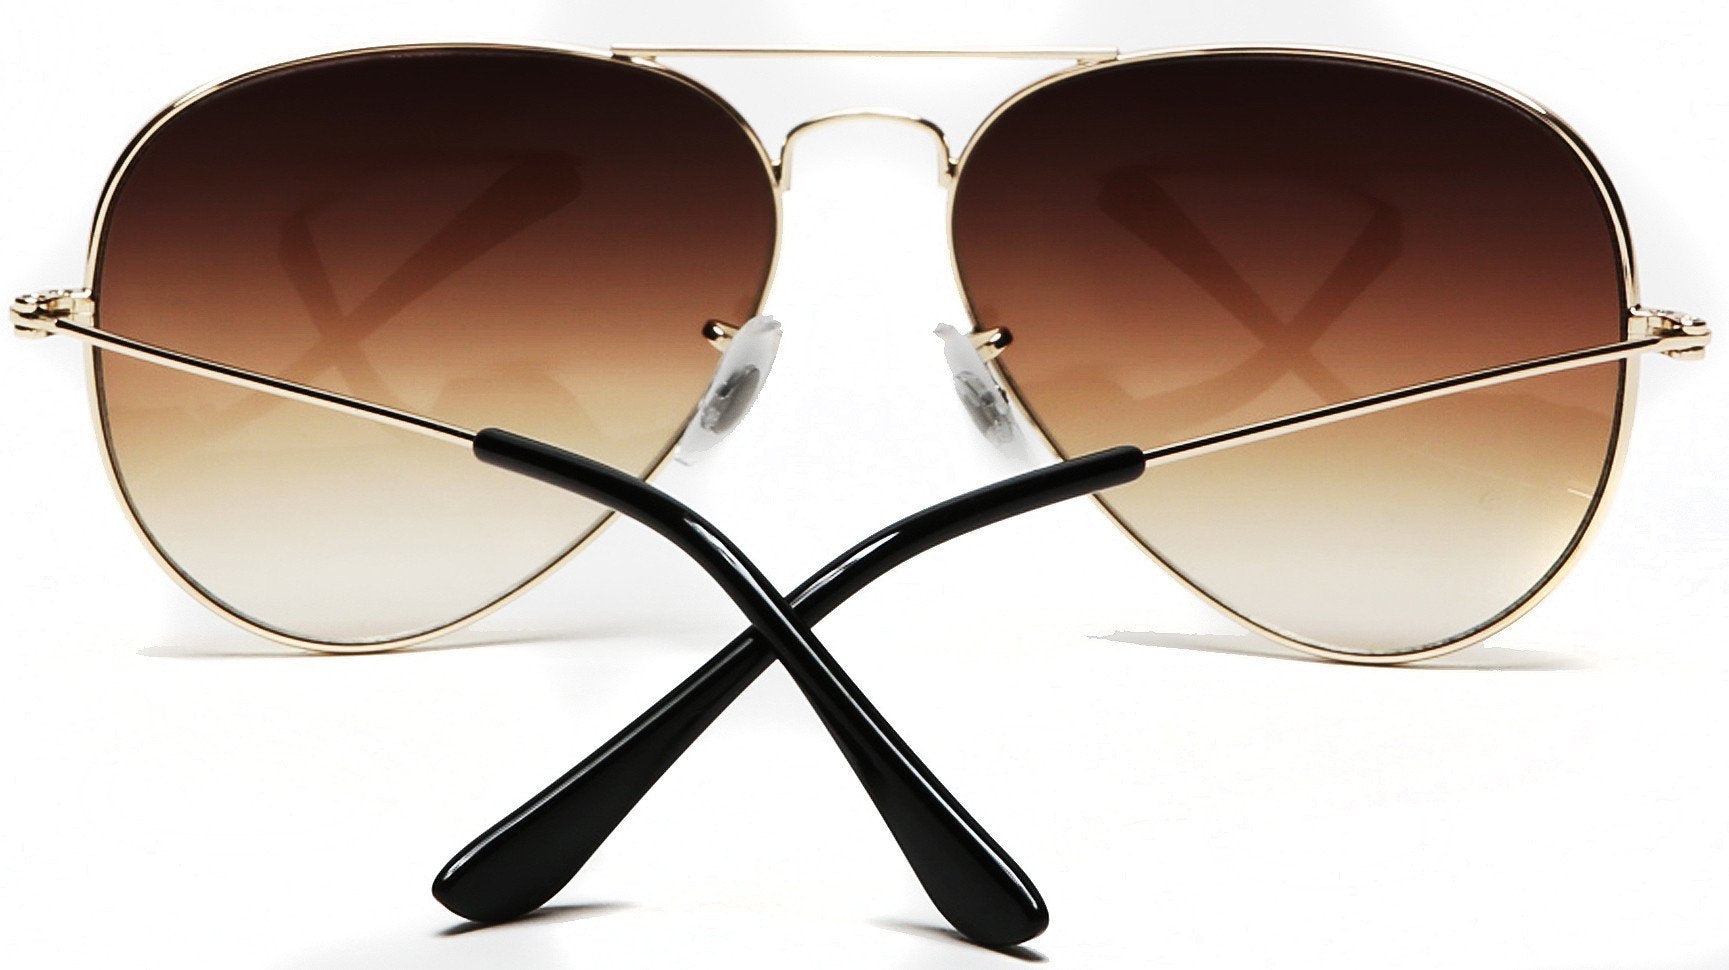 Classic Pilot Military Sunglasses Brown Frame Brown Lens - Glen & Ivy Sky Inspired-Samba Shades